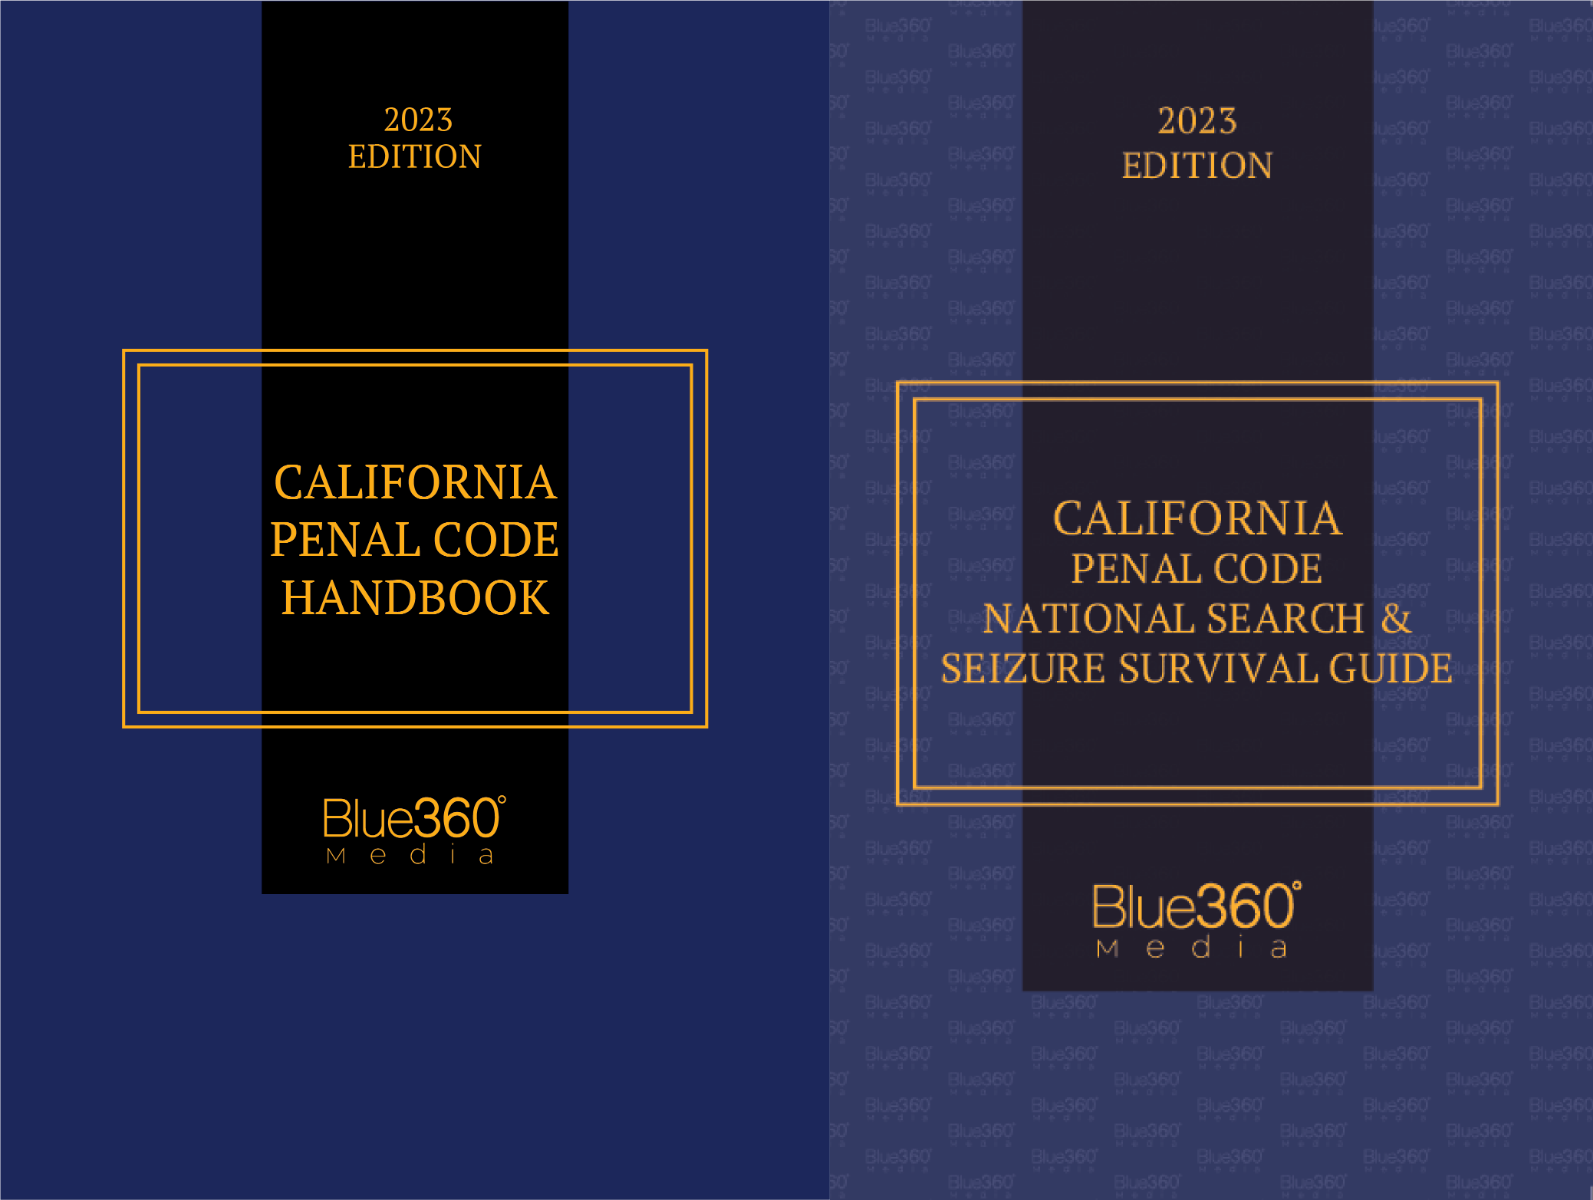 California Penal Code Handbook + Search & Seizure Survival Guide: 2023 Edition